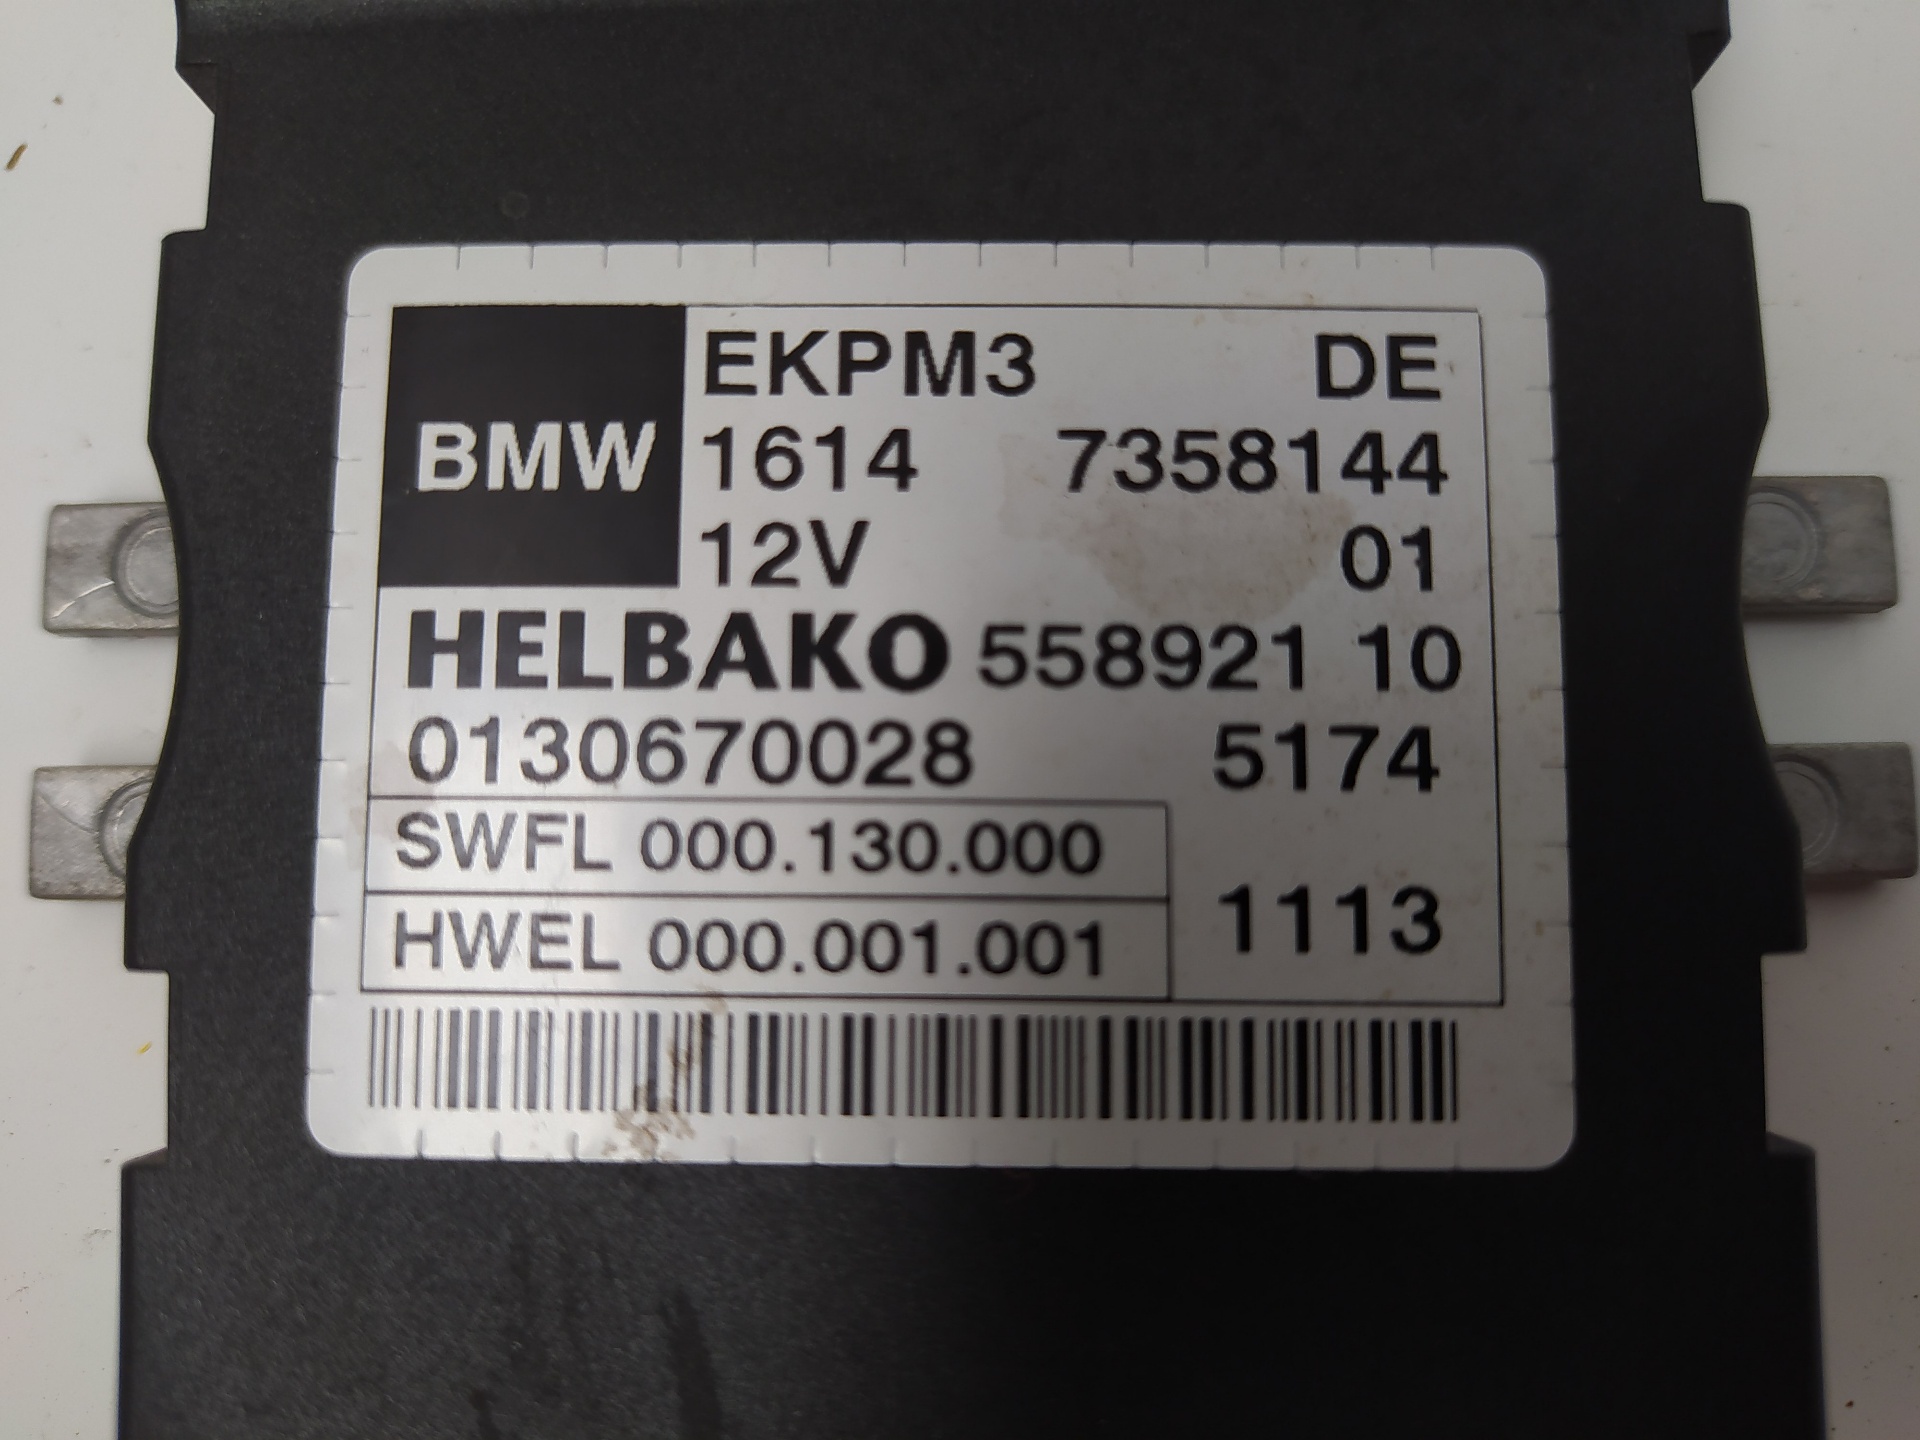 BMW 1 Series F20/F21 (2011-2020) Other Control Units 16147358144, 7358144, 55892110 22887014